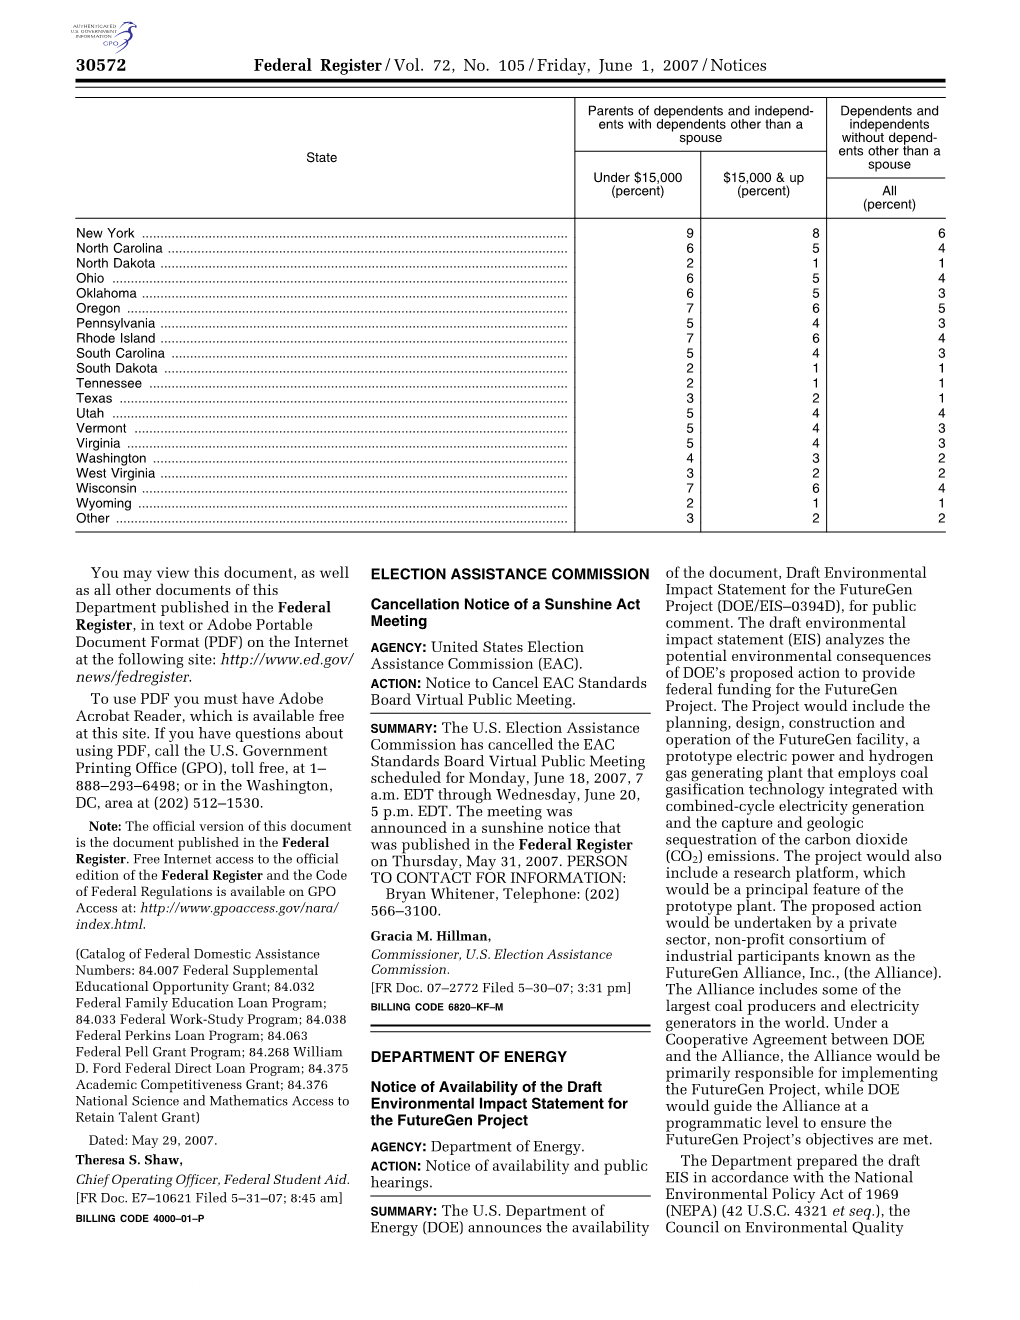 Federal Register/Vol. 72, No. 105/Friday, June 1, 2007/Notices